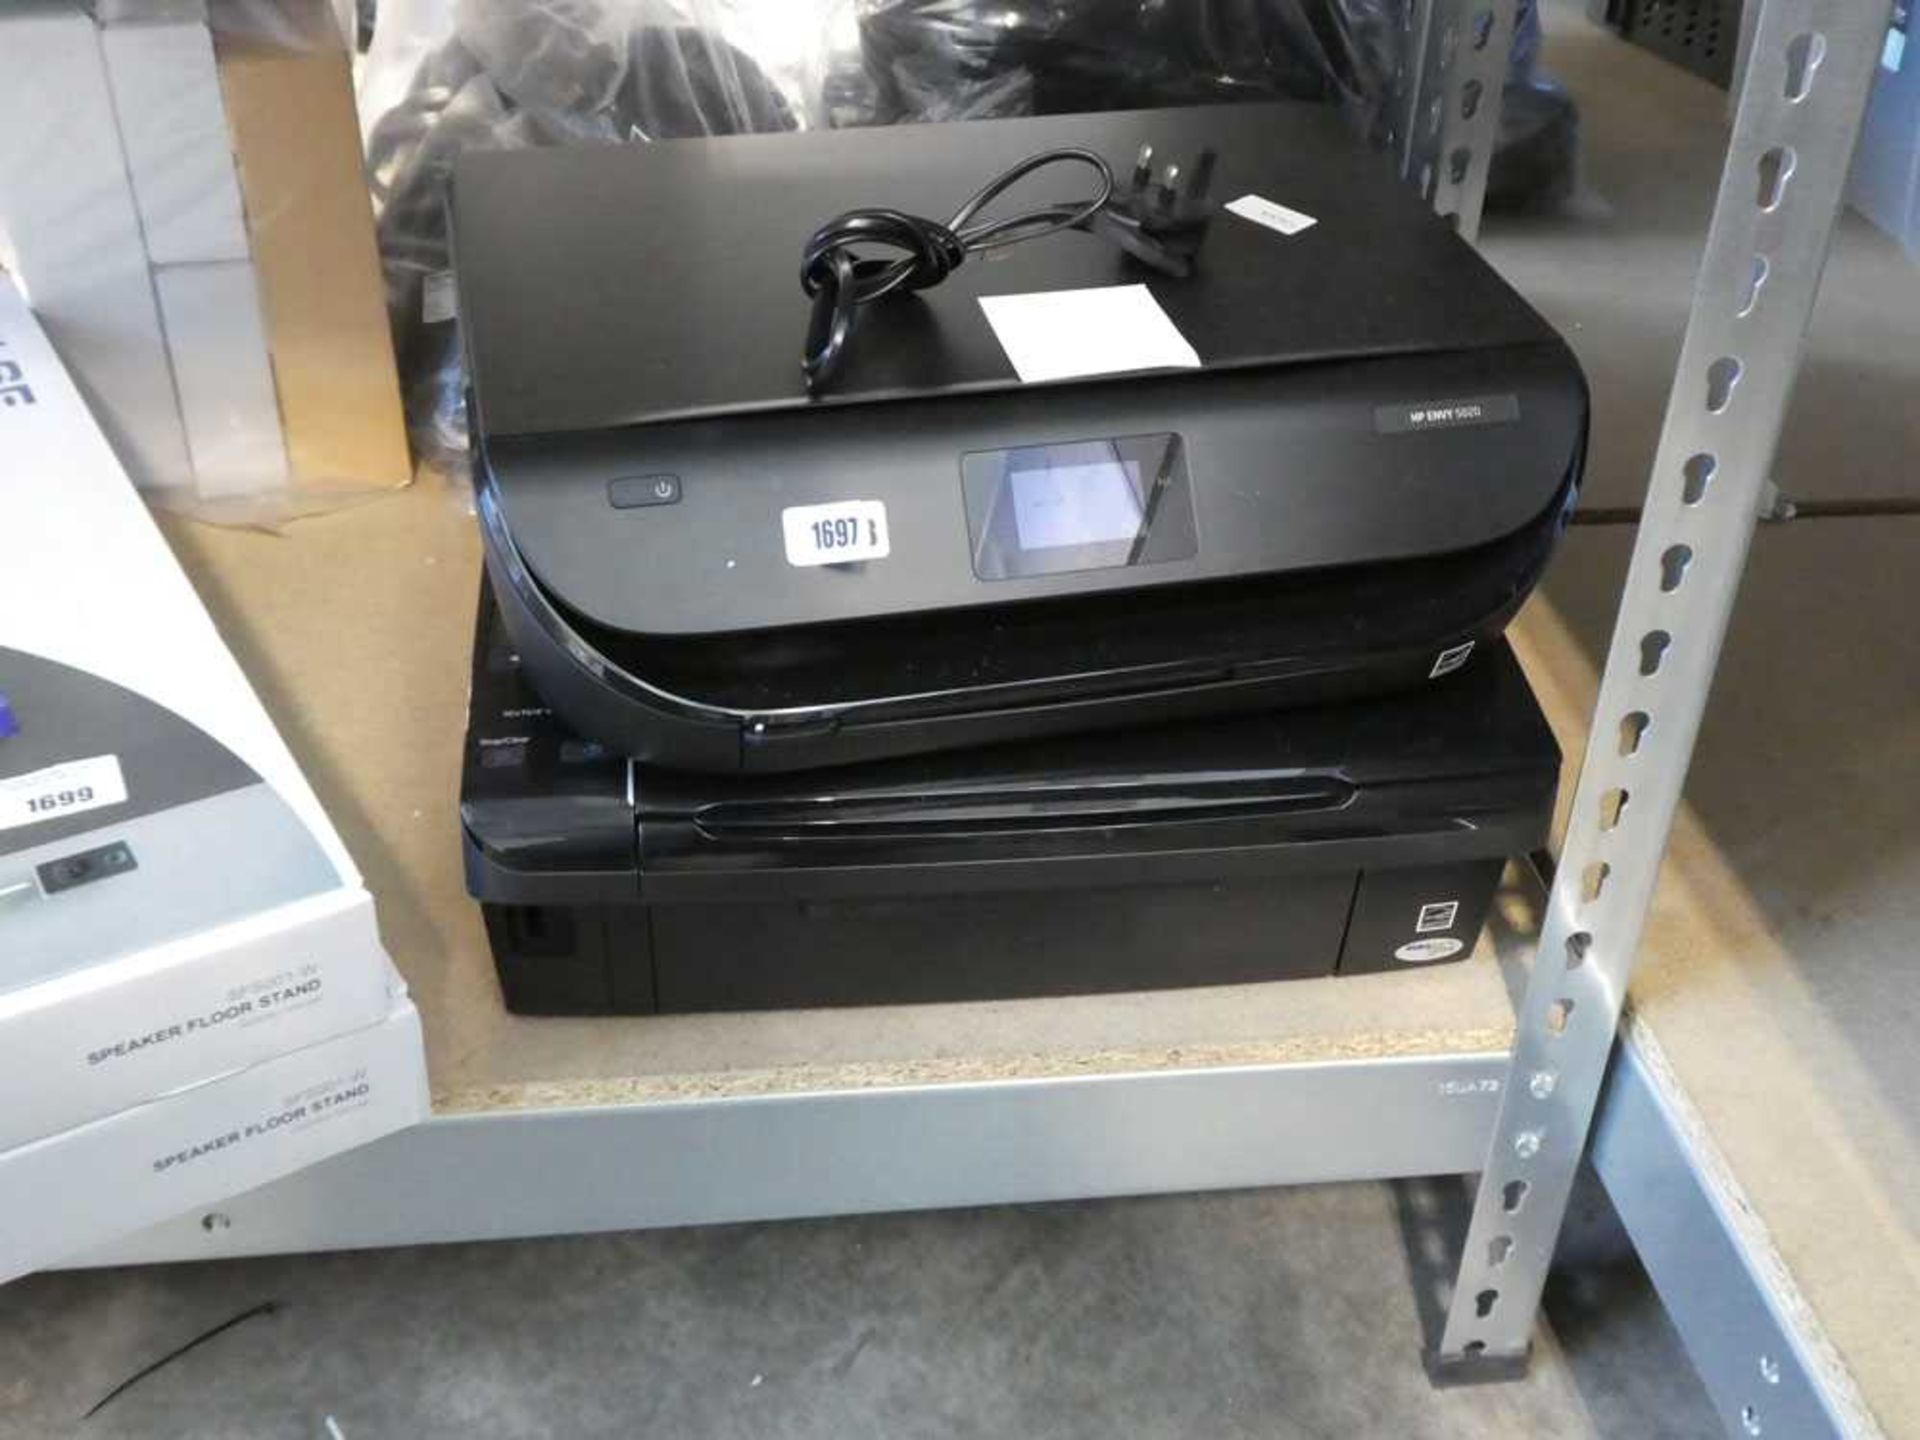 HP Envy 5020 printer and Epson printer